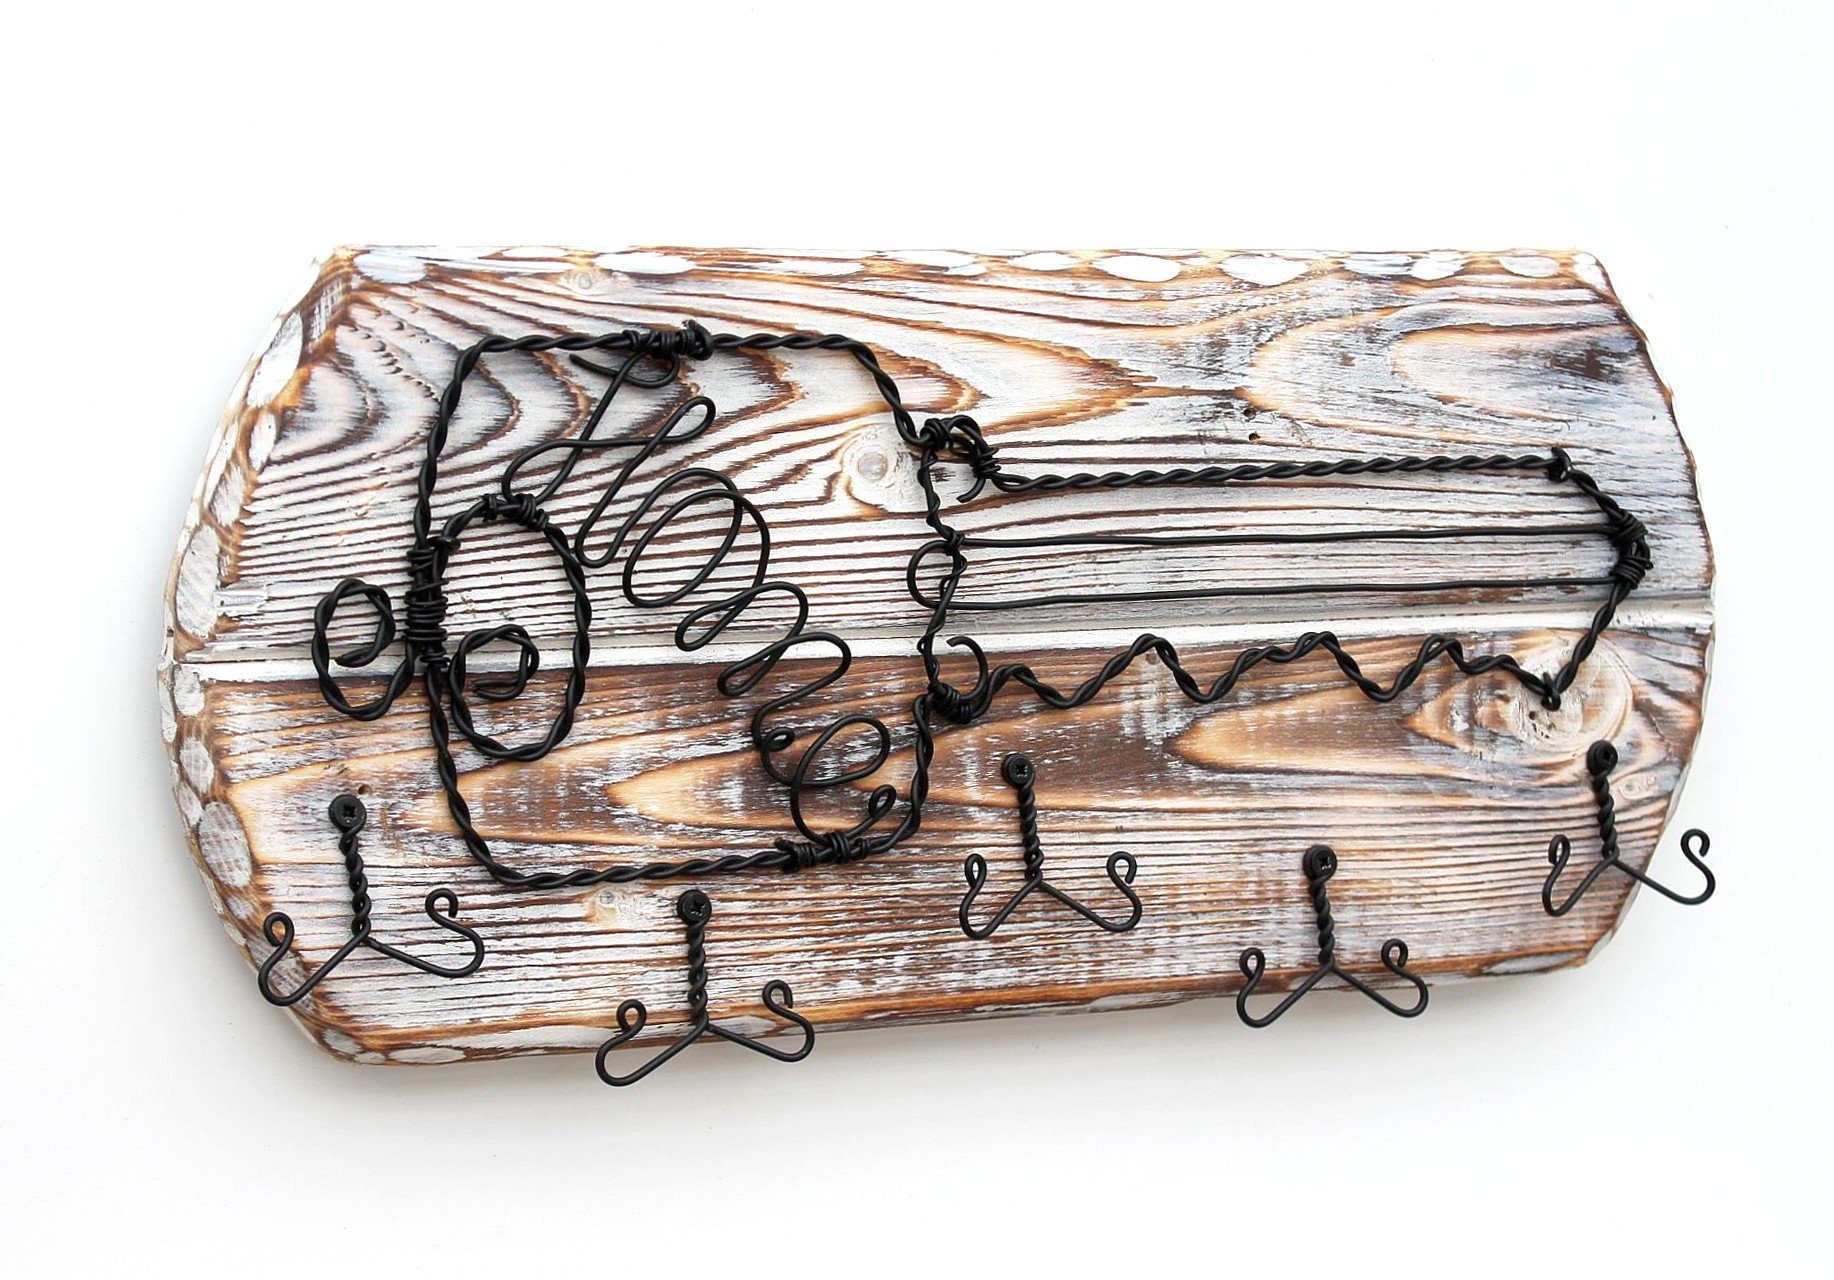 DanDiBo Schlüsselbrett Schlüsselbrett Holz Schlüsselboard 93910  Schlüsselhaken handgemacht Handmade Bügel Holzschlüssel